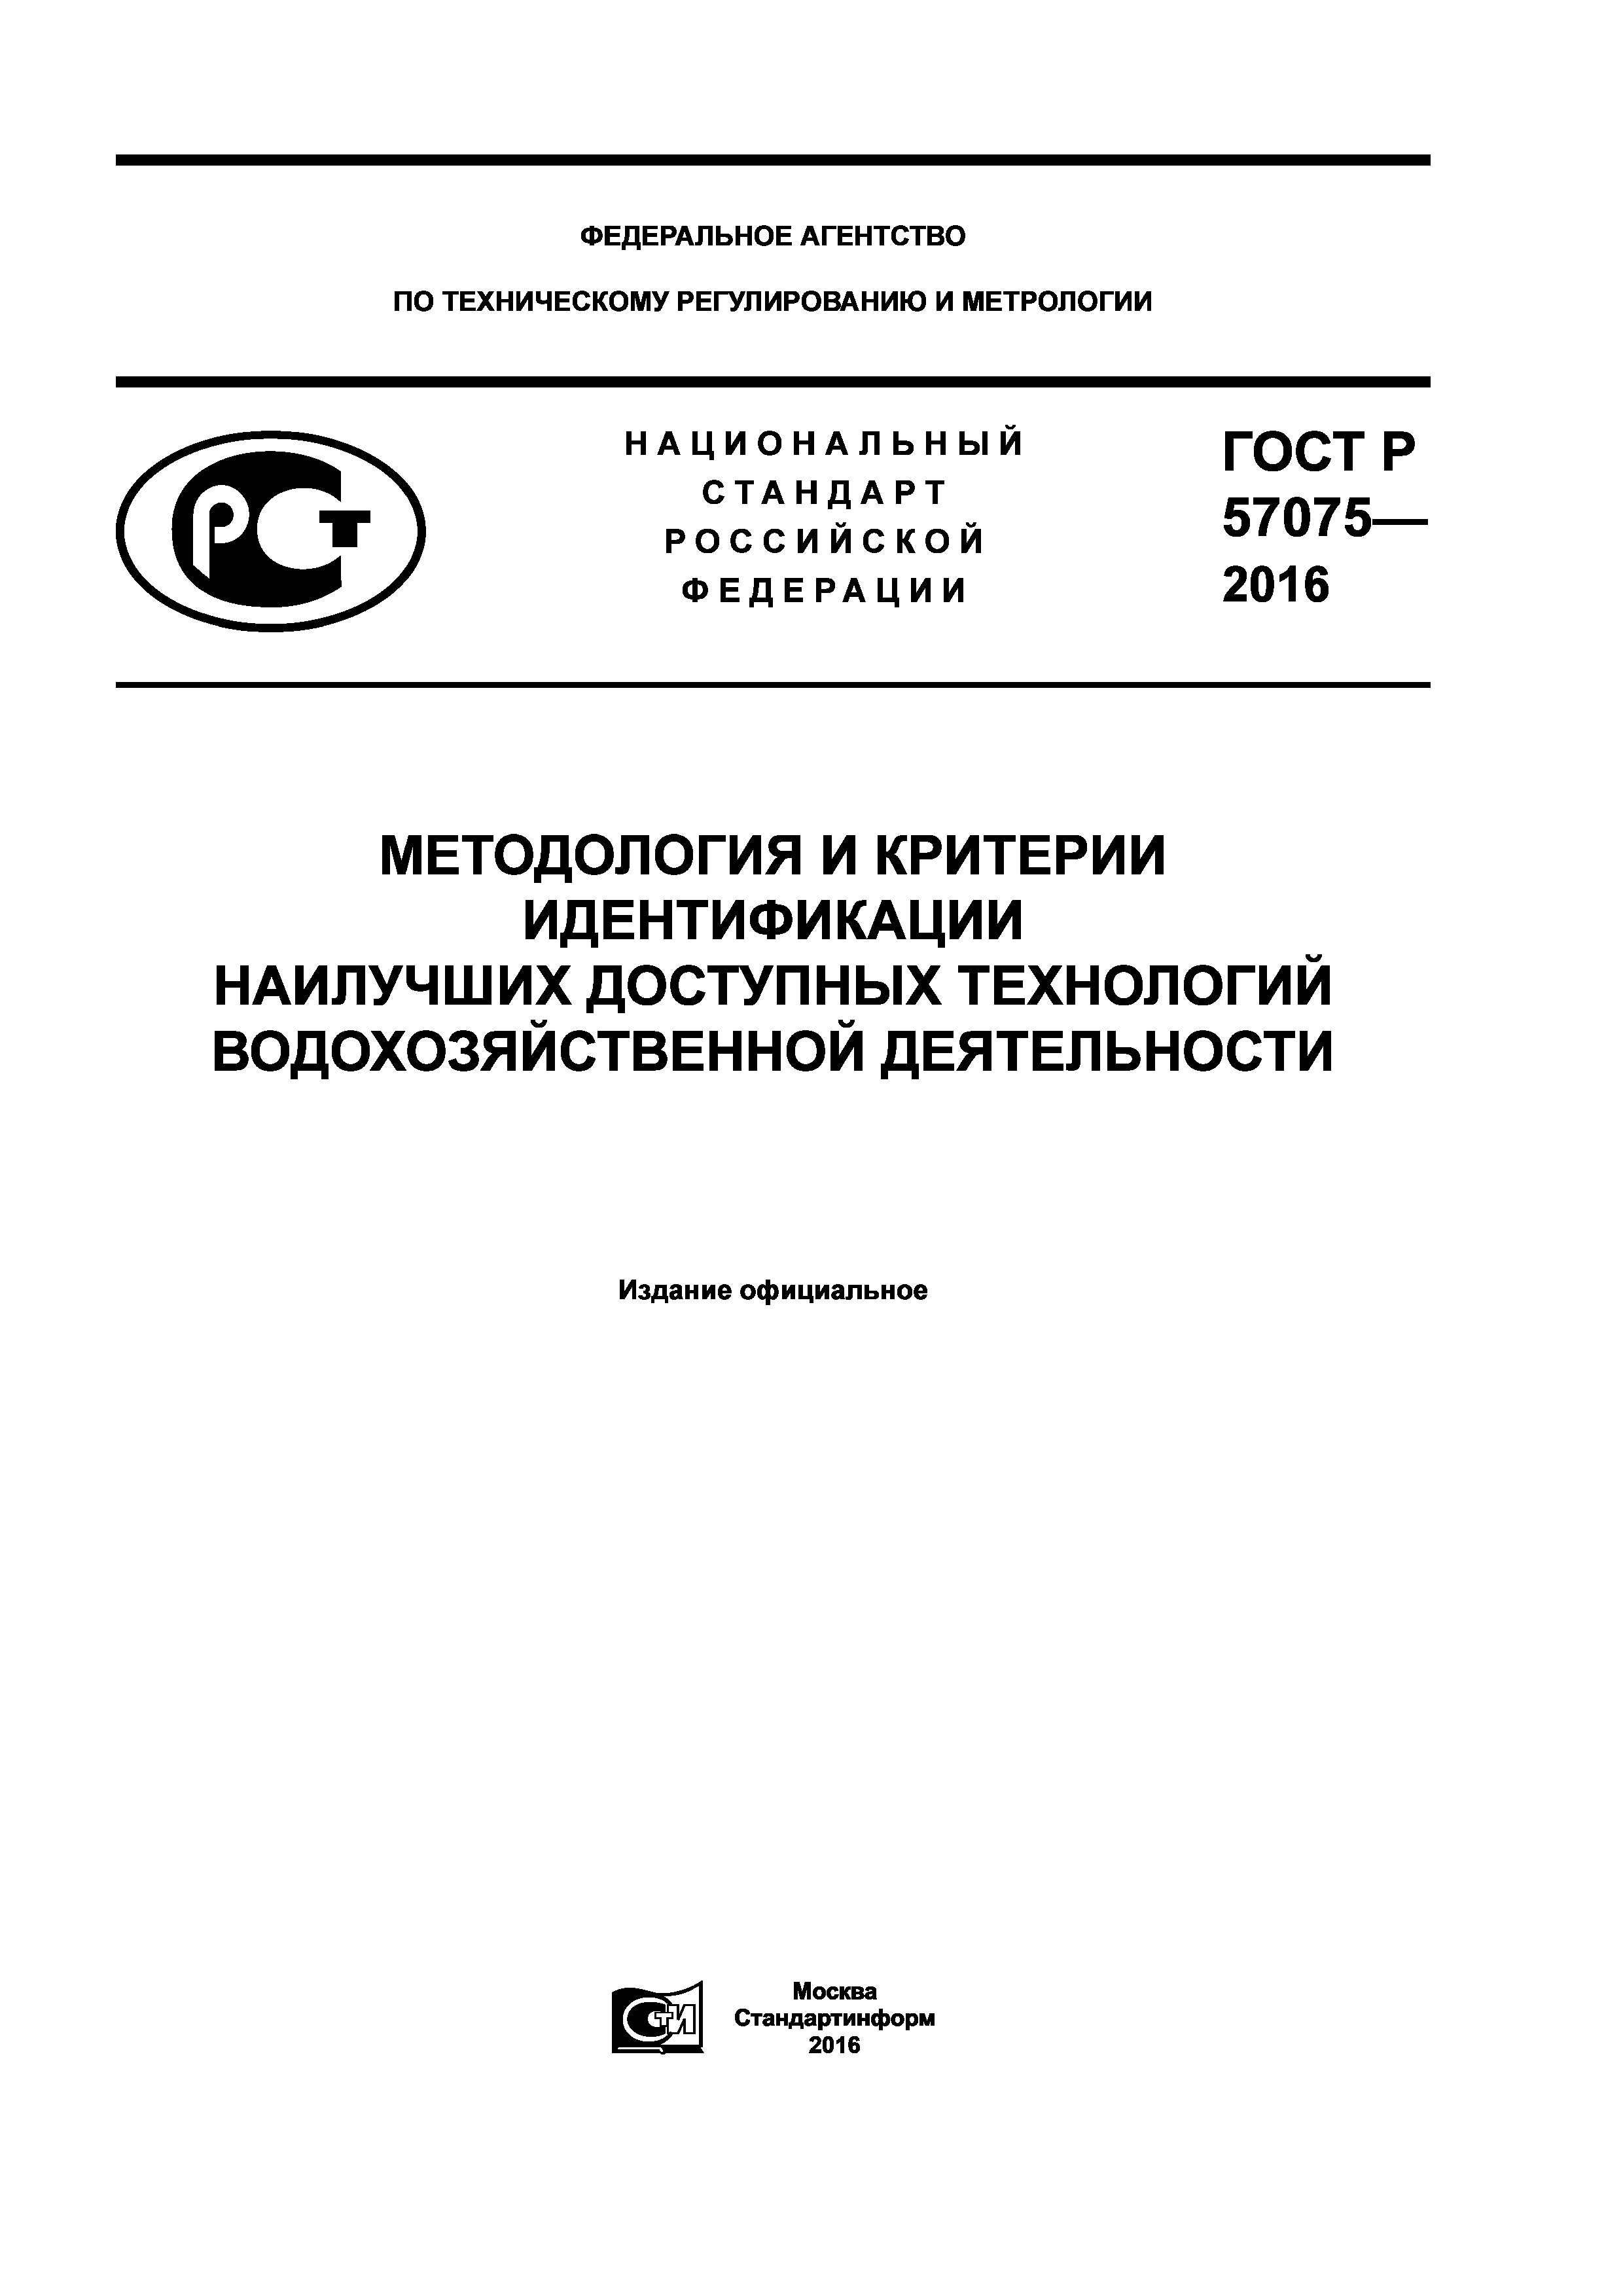 ГОСТ Р 57075-2016